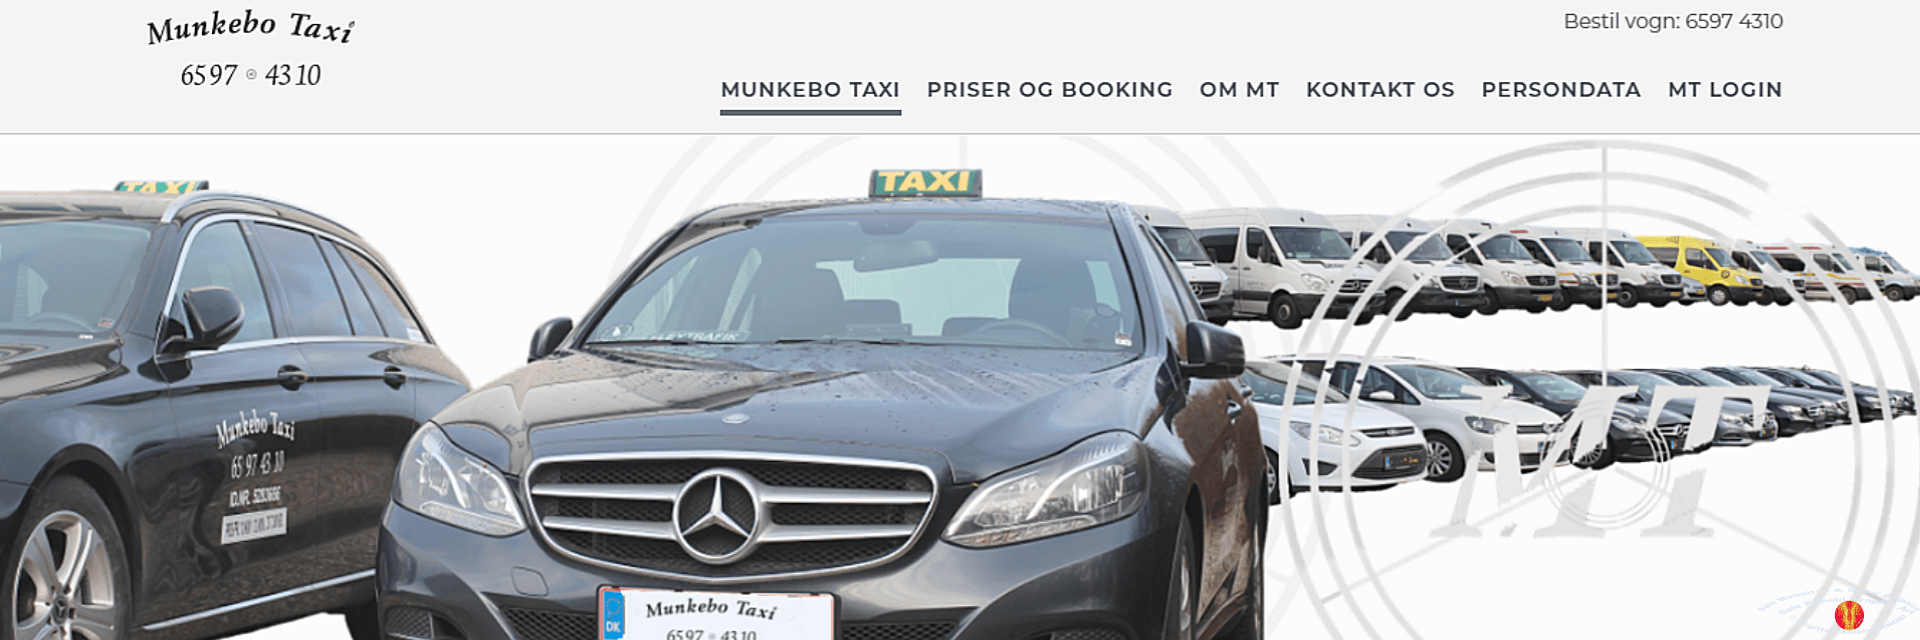 Link Munkebo Taxi Kanobi® frontpage screenprint.